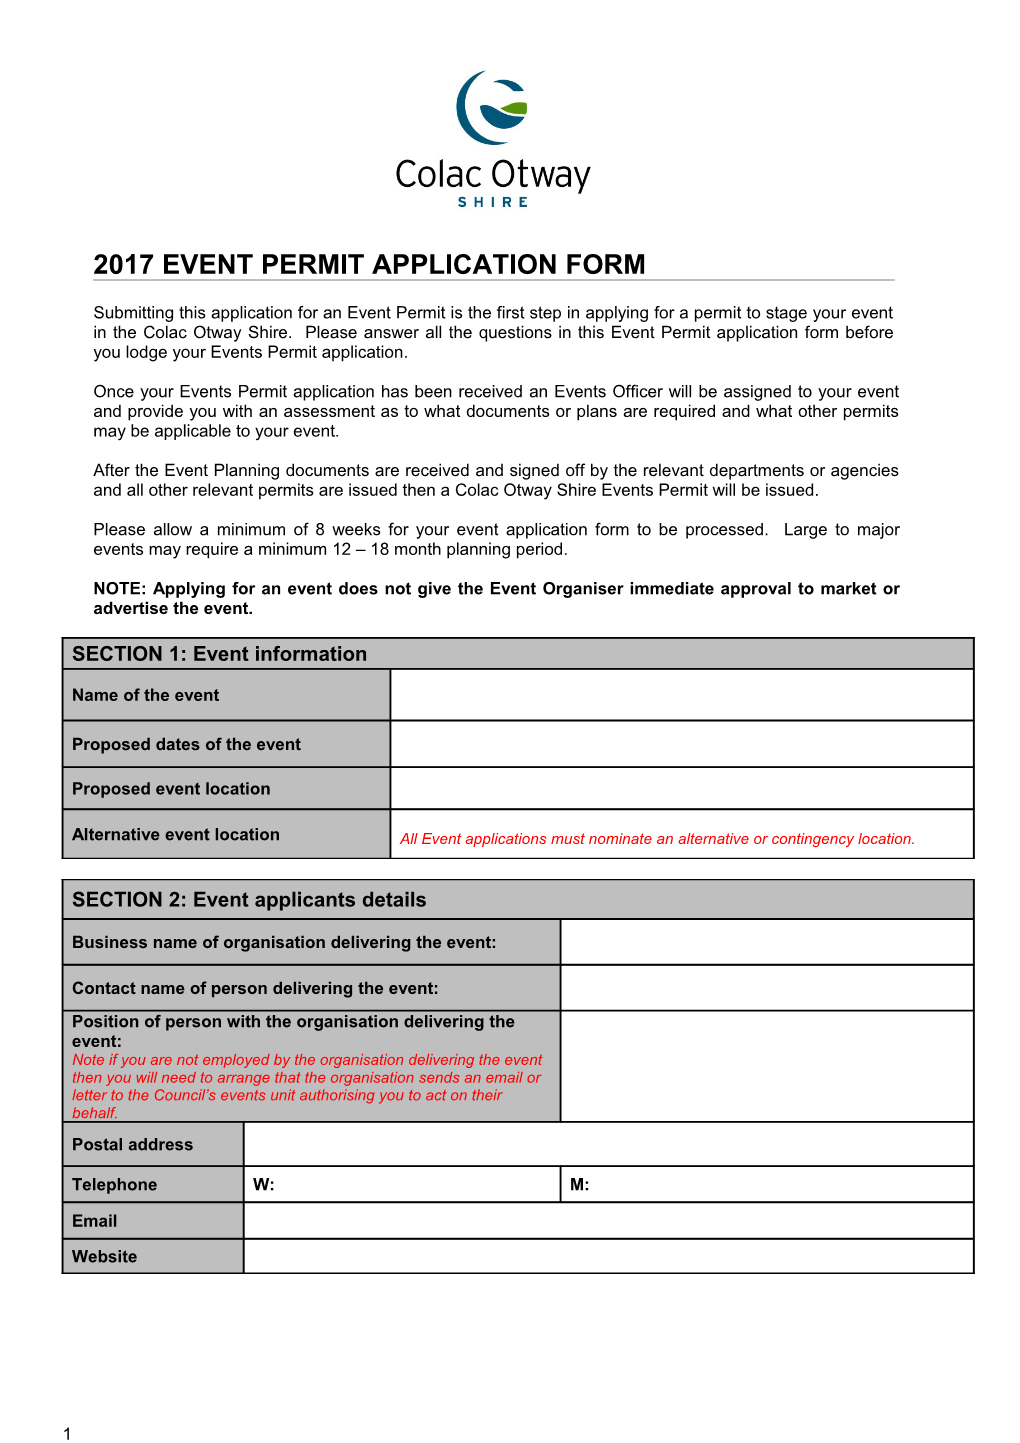 2017 Event Permit Application Form